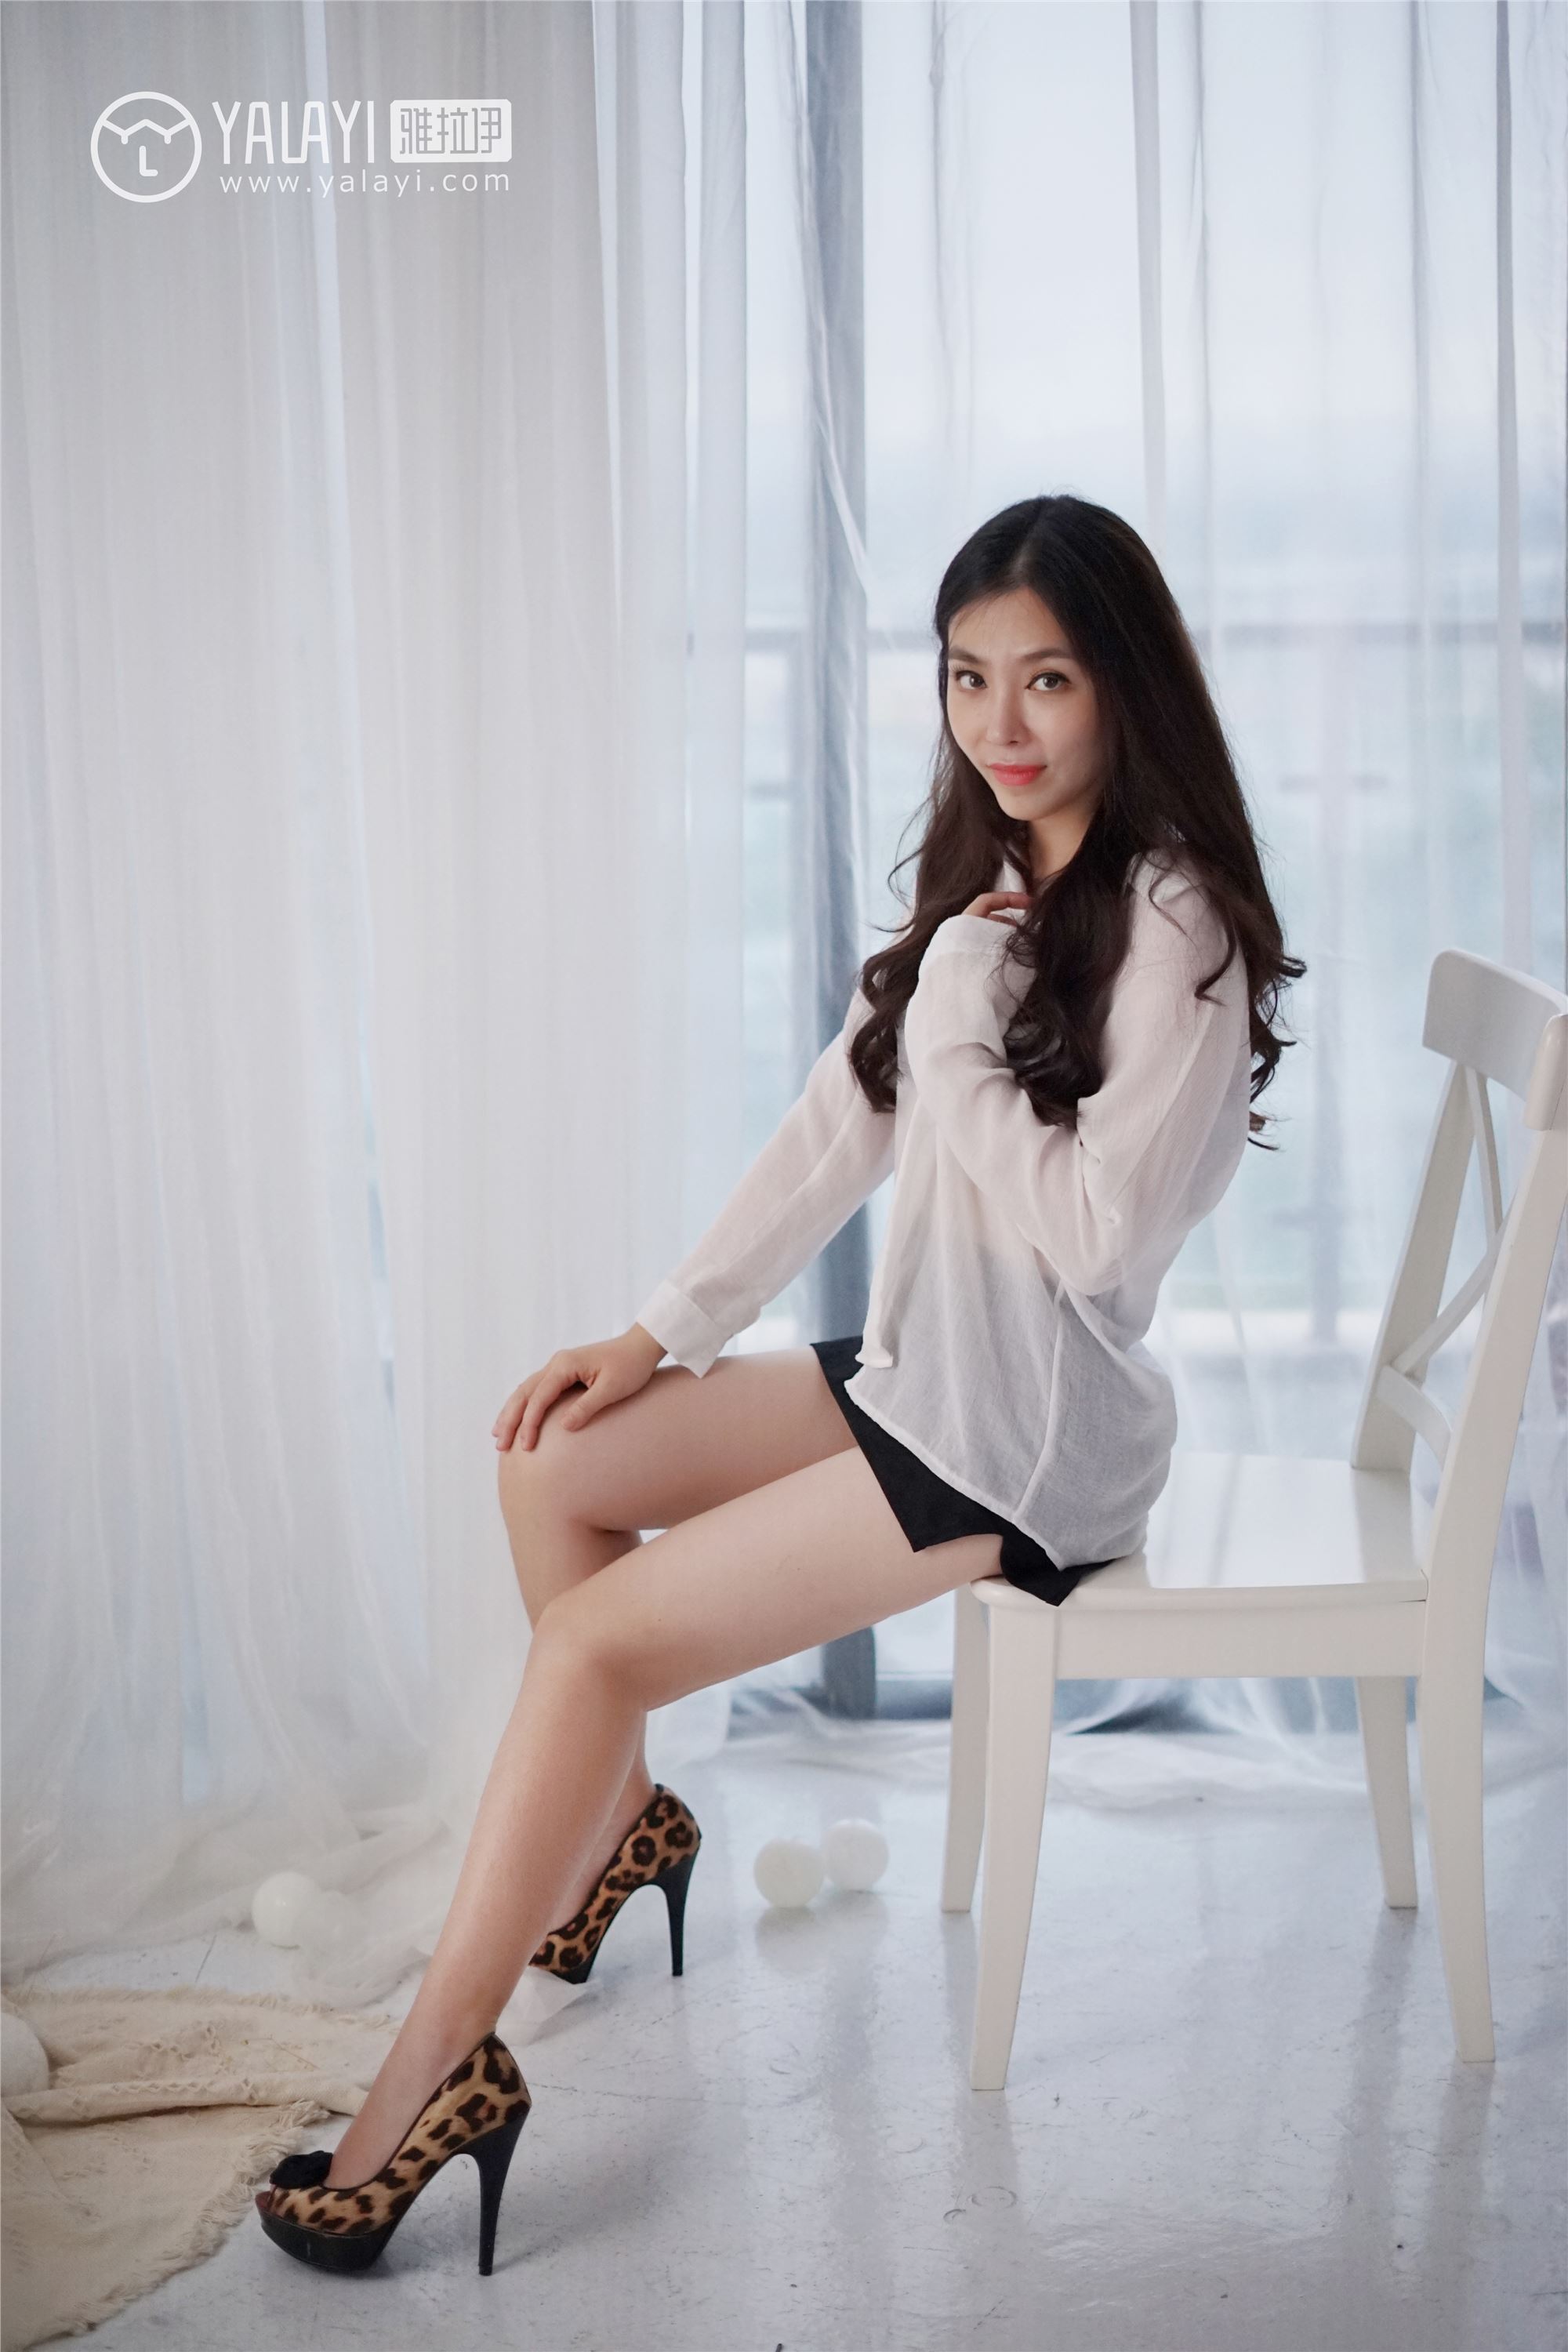 [yalayi yalayi] 2018.10.20 no.012 leg beauty Shen Ziyun